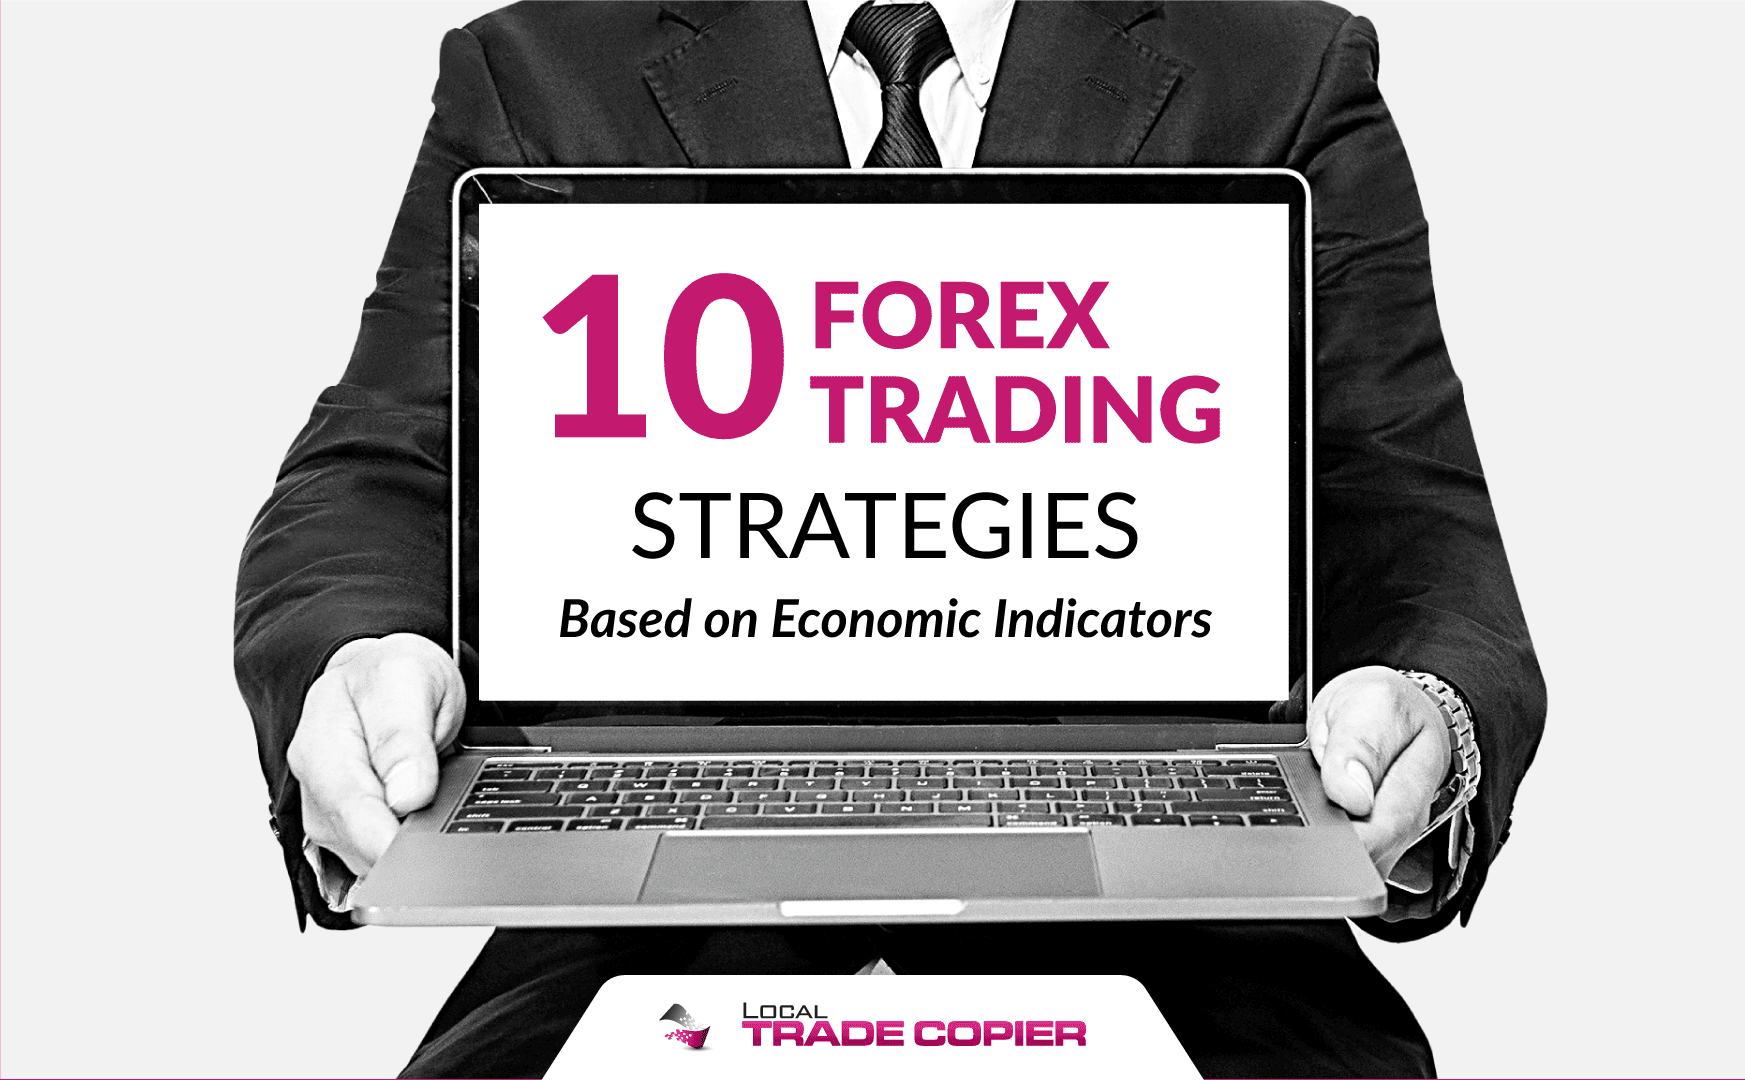 10 Forex Trading Strategies Based on Economic Indicators